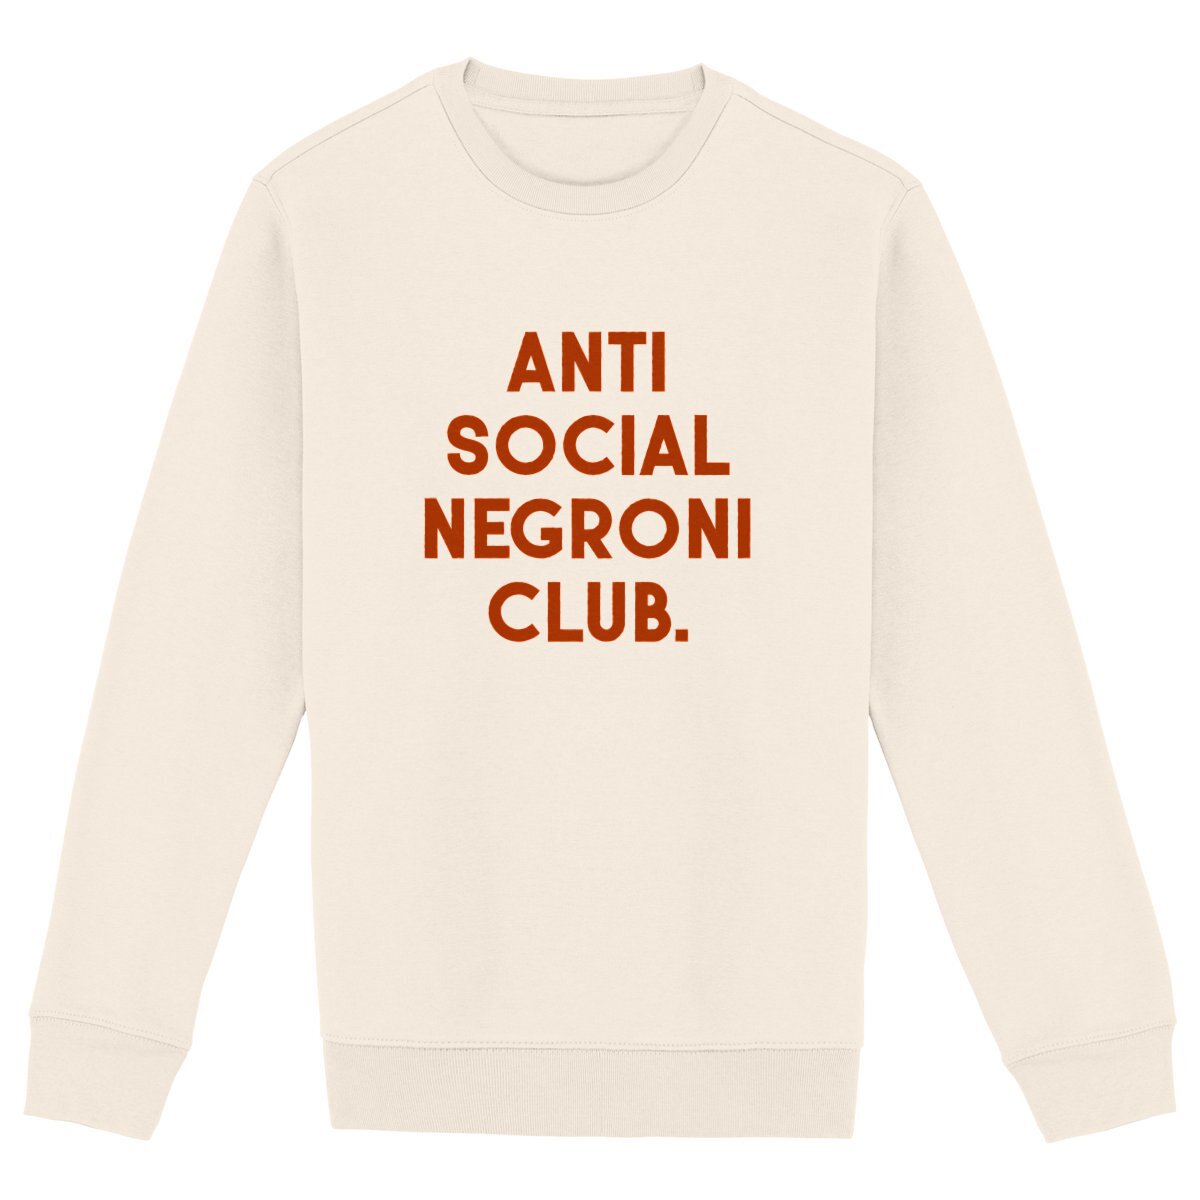 Anti Social Negroni Club - Organic Sweatshirt - The Refined Spirit